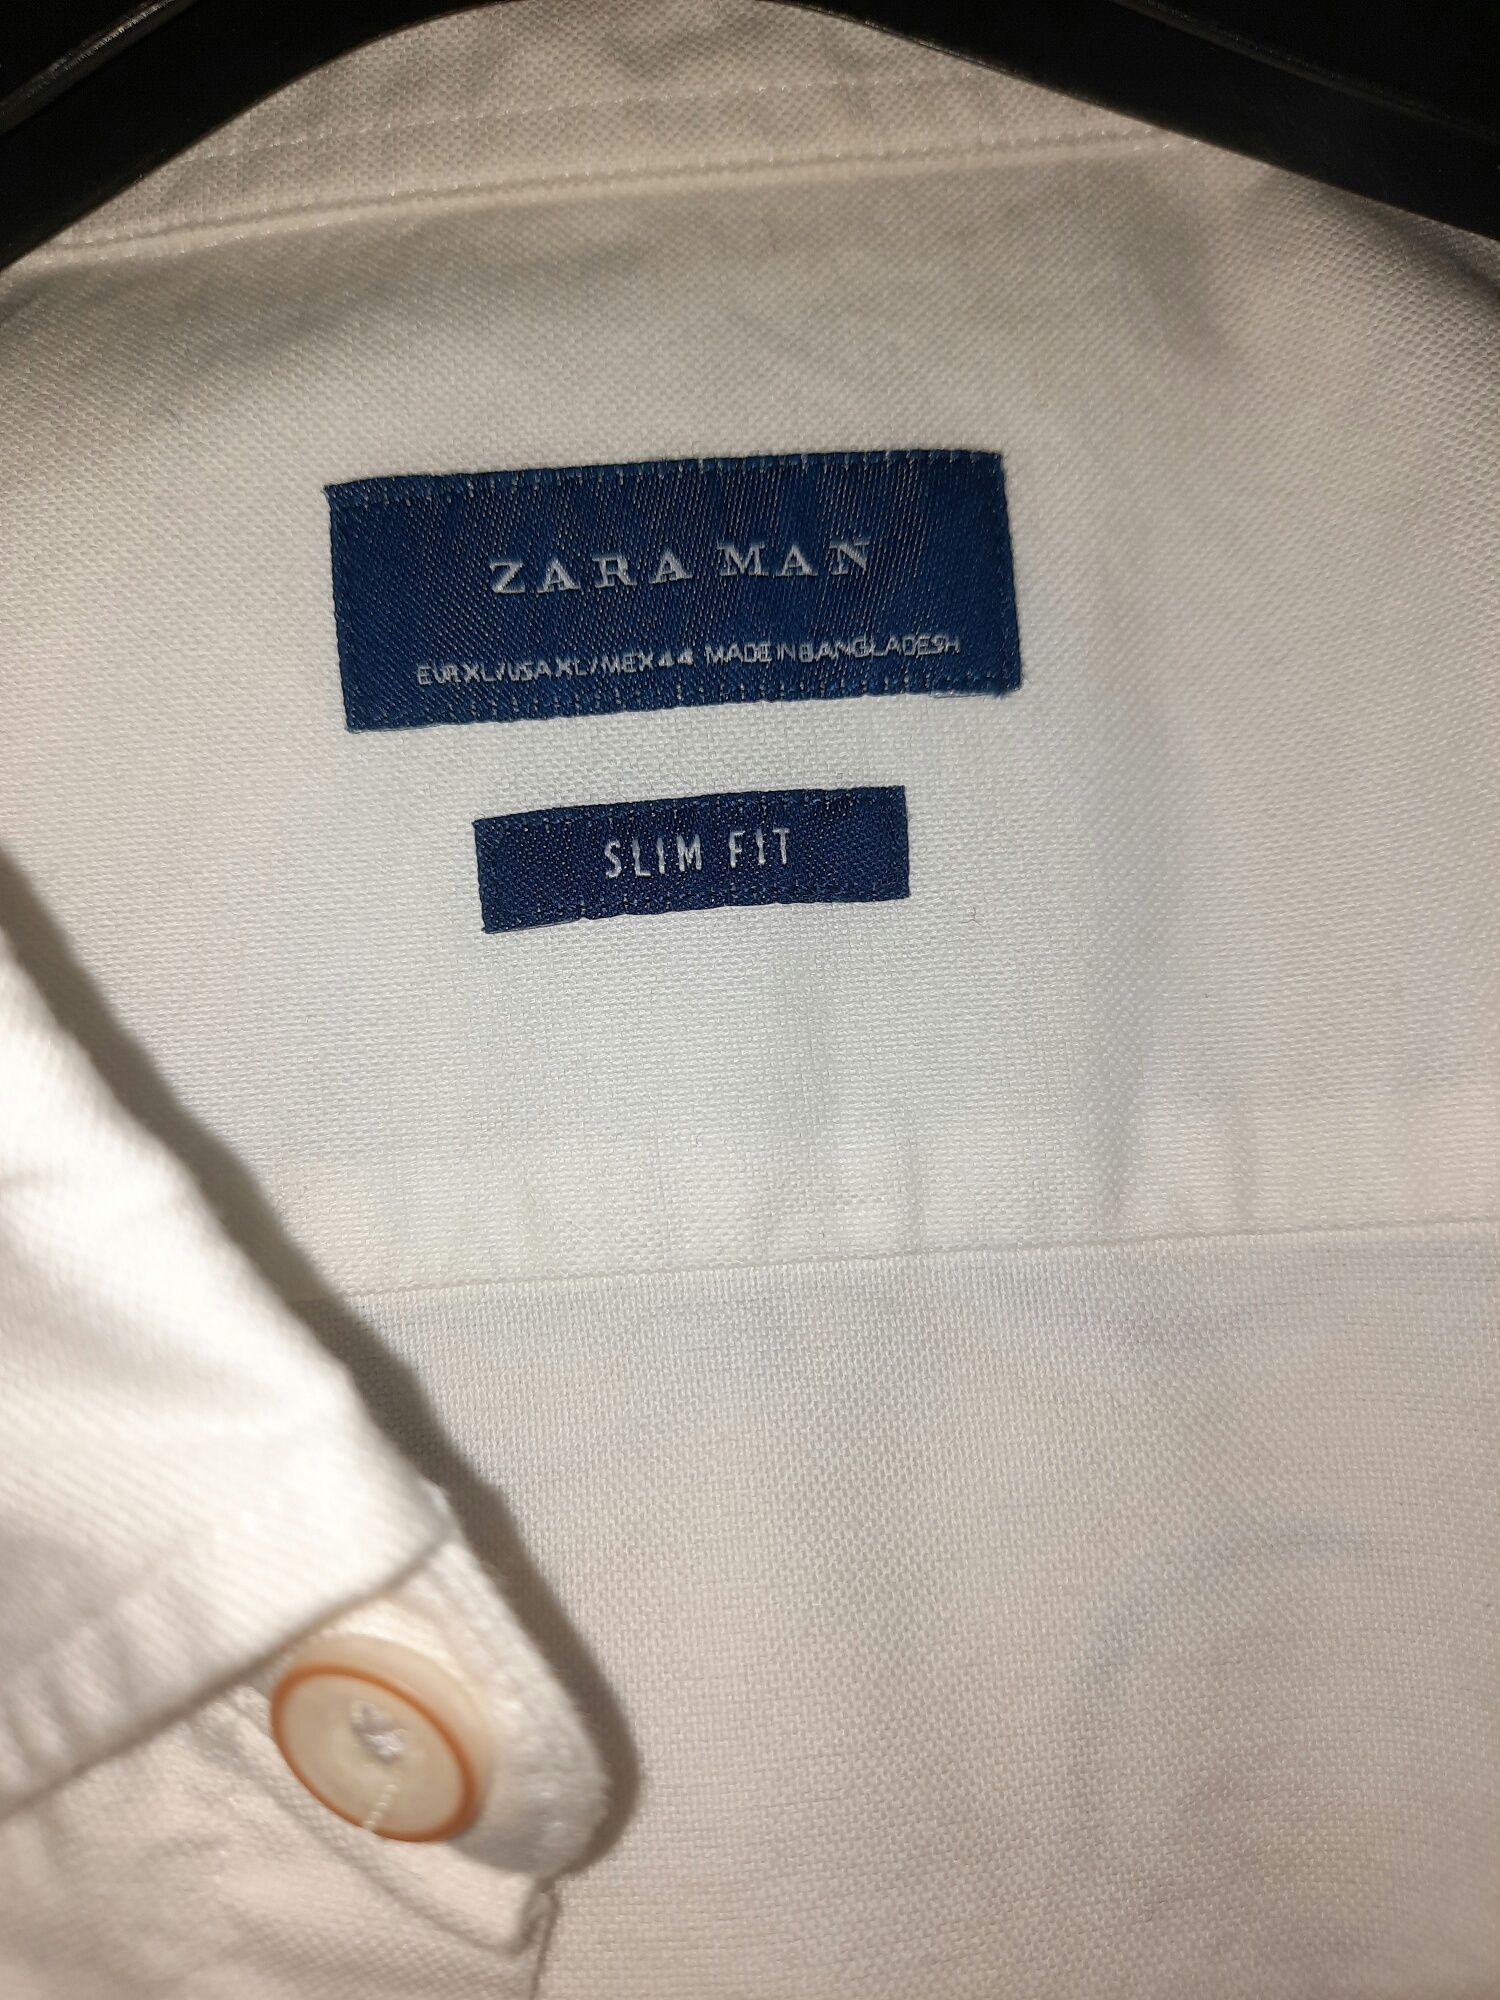 Zara памучна риза XL